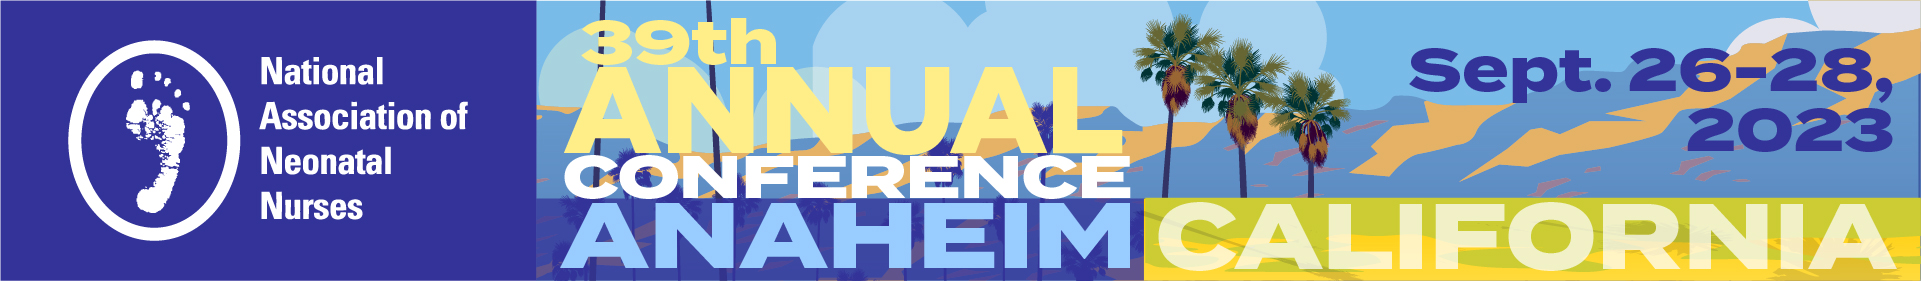 NANN 2023 Annual Conference banner